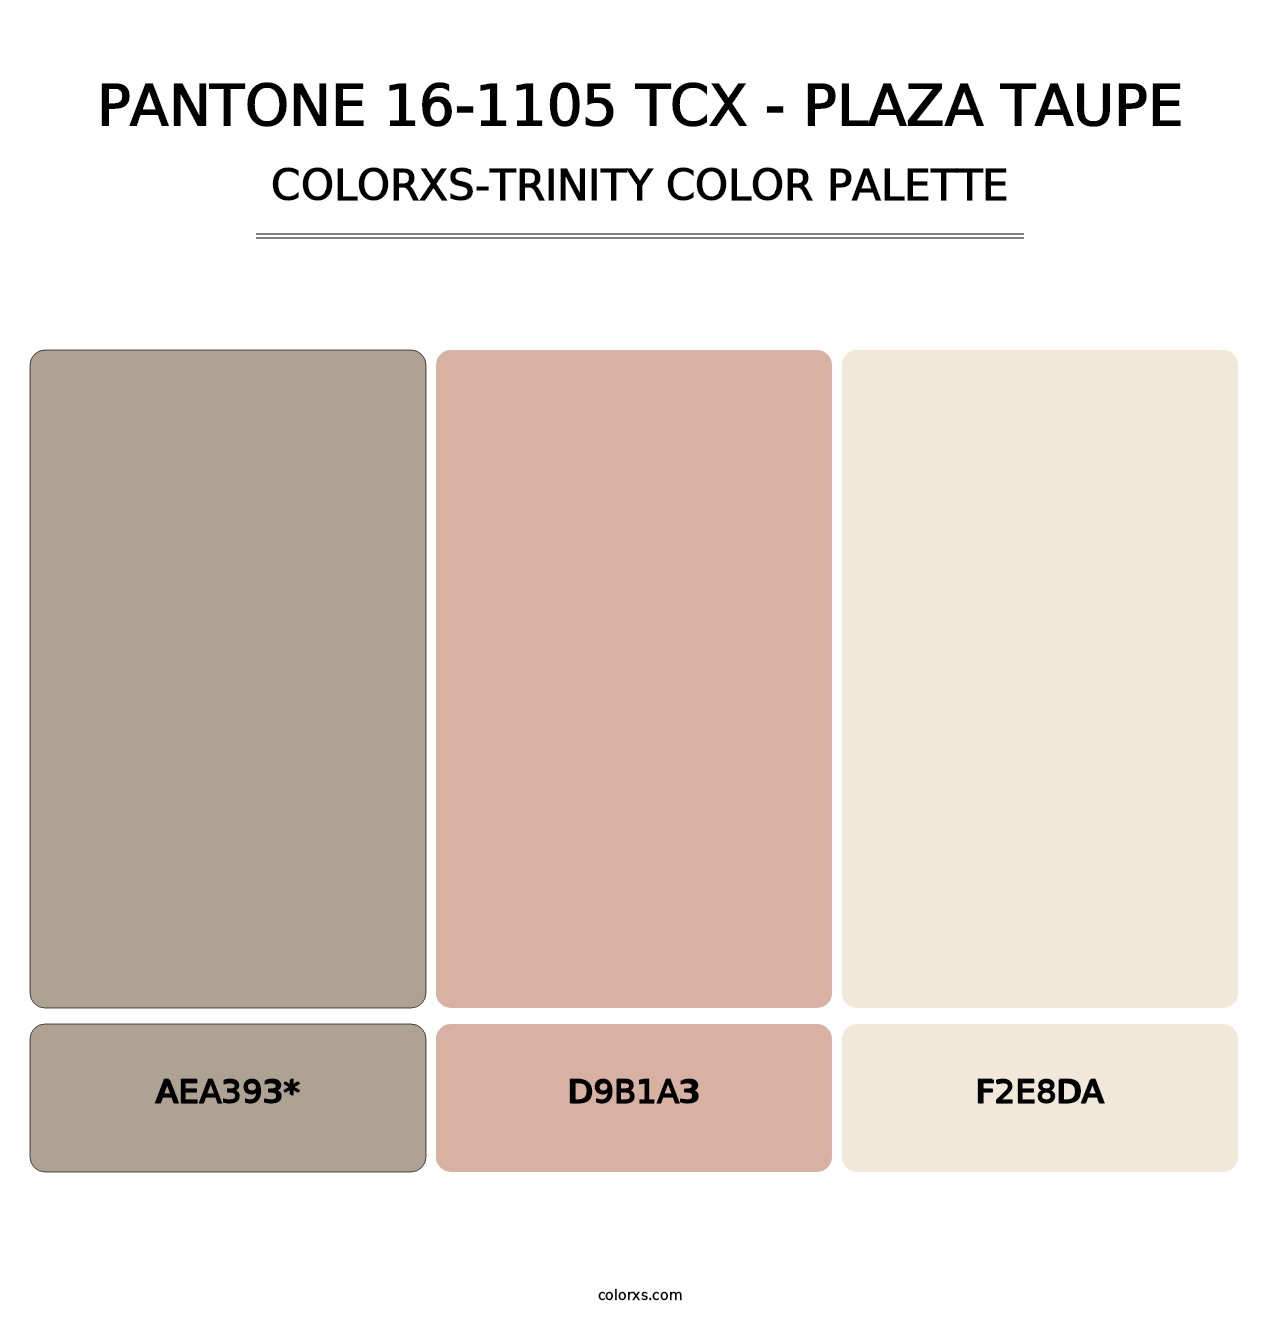 PANTONE 16-1105 TCX - Plaza Taupe - Colorxs Trinity Palette